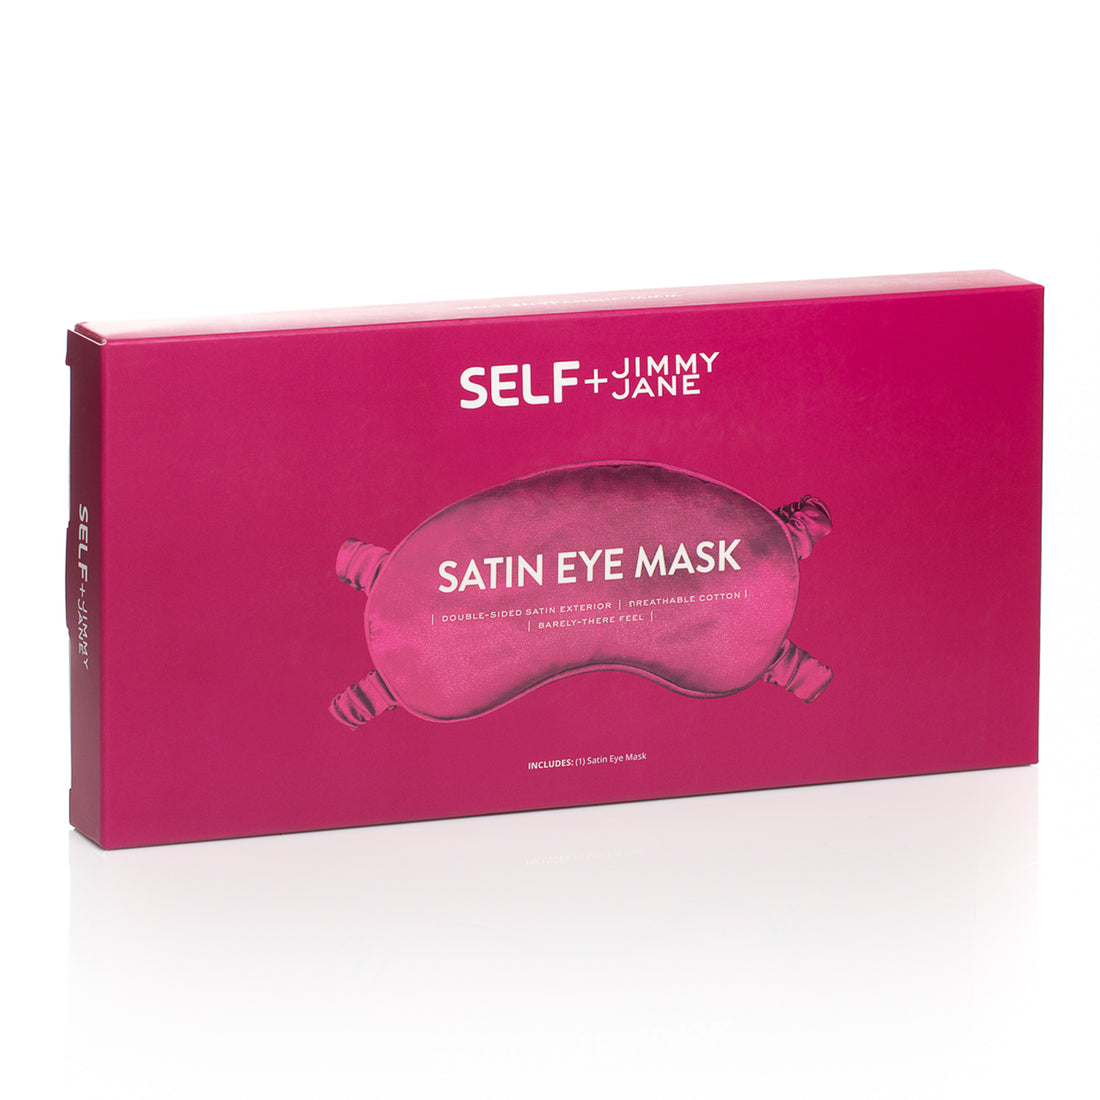 Self + Jimmyjane satin eye mask packaging